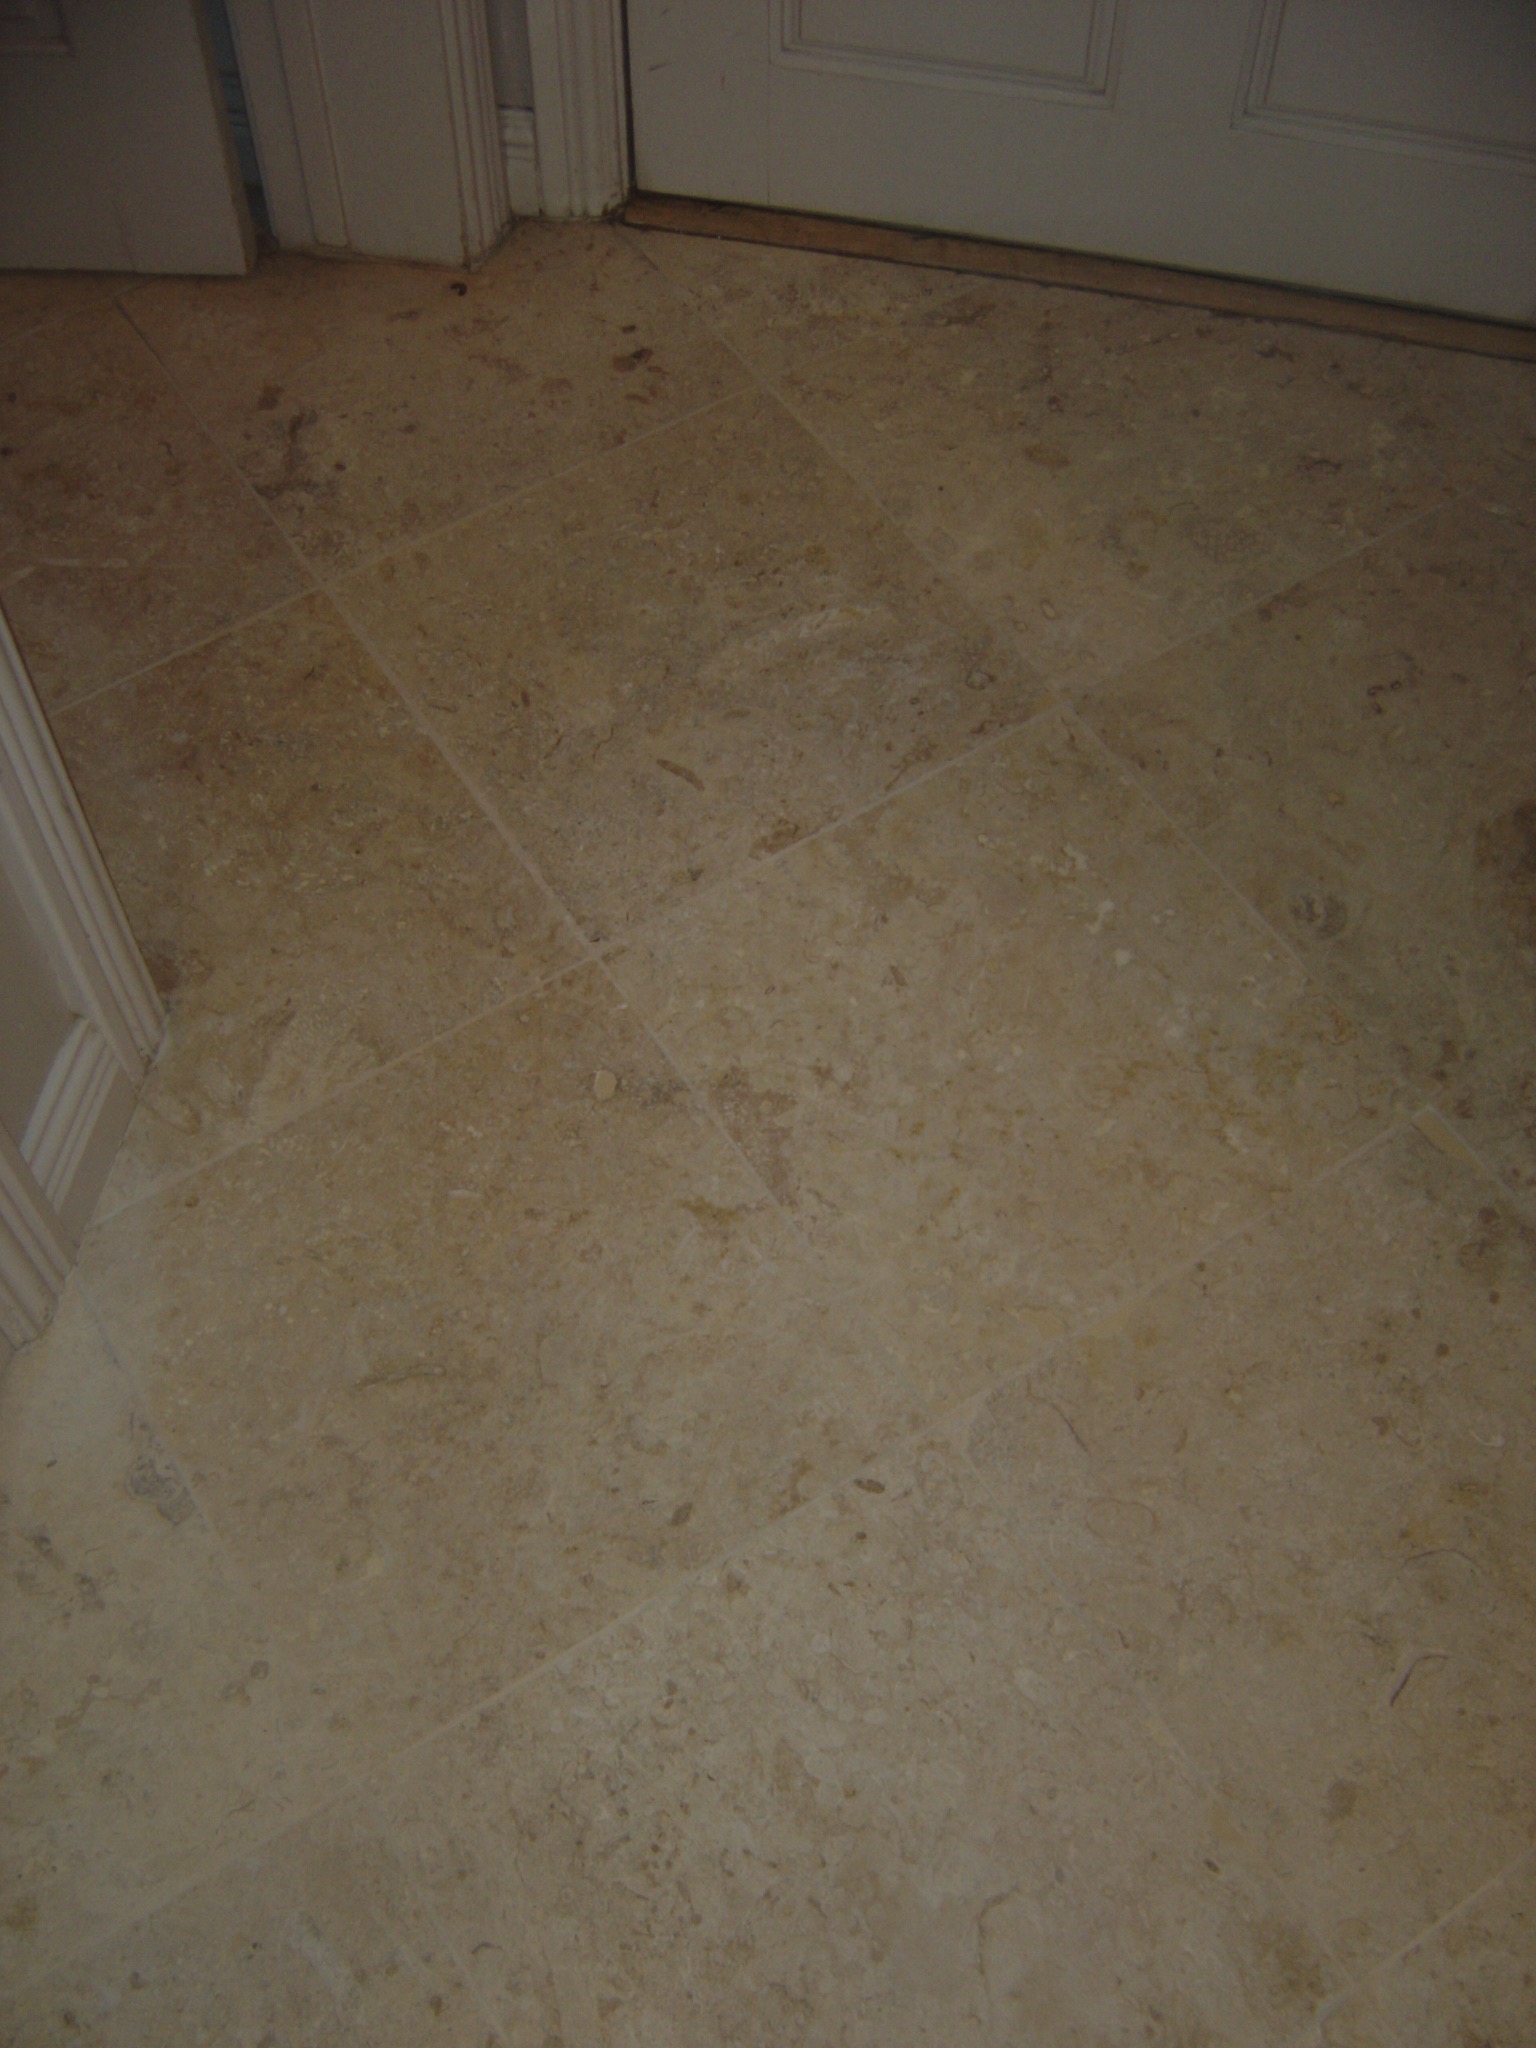 Travertine tile floor AFTER cleaning sealing - Tucson AZ | Arizona Tile